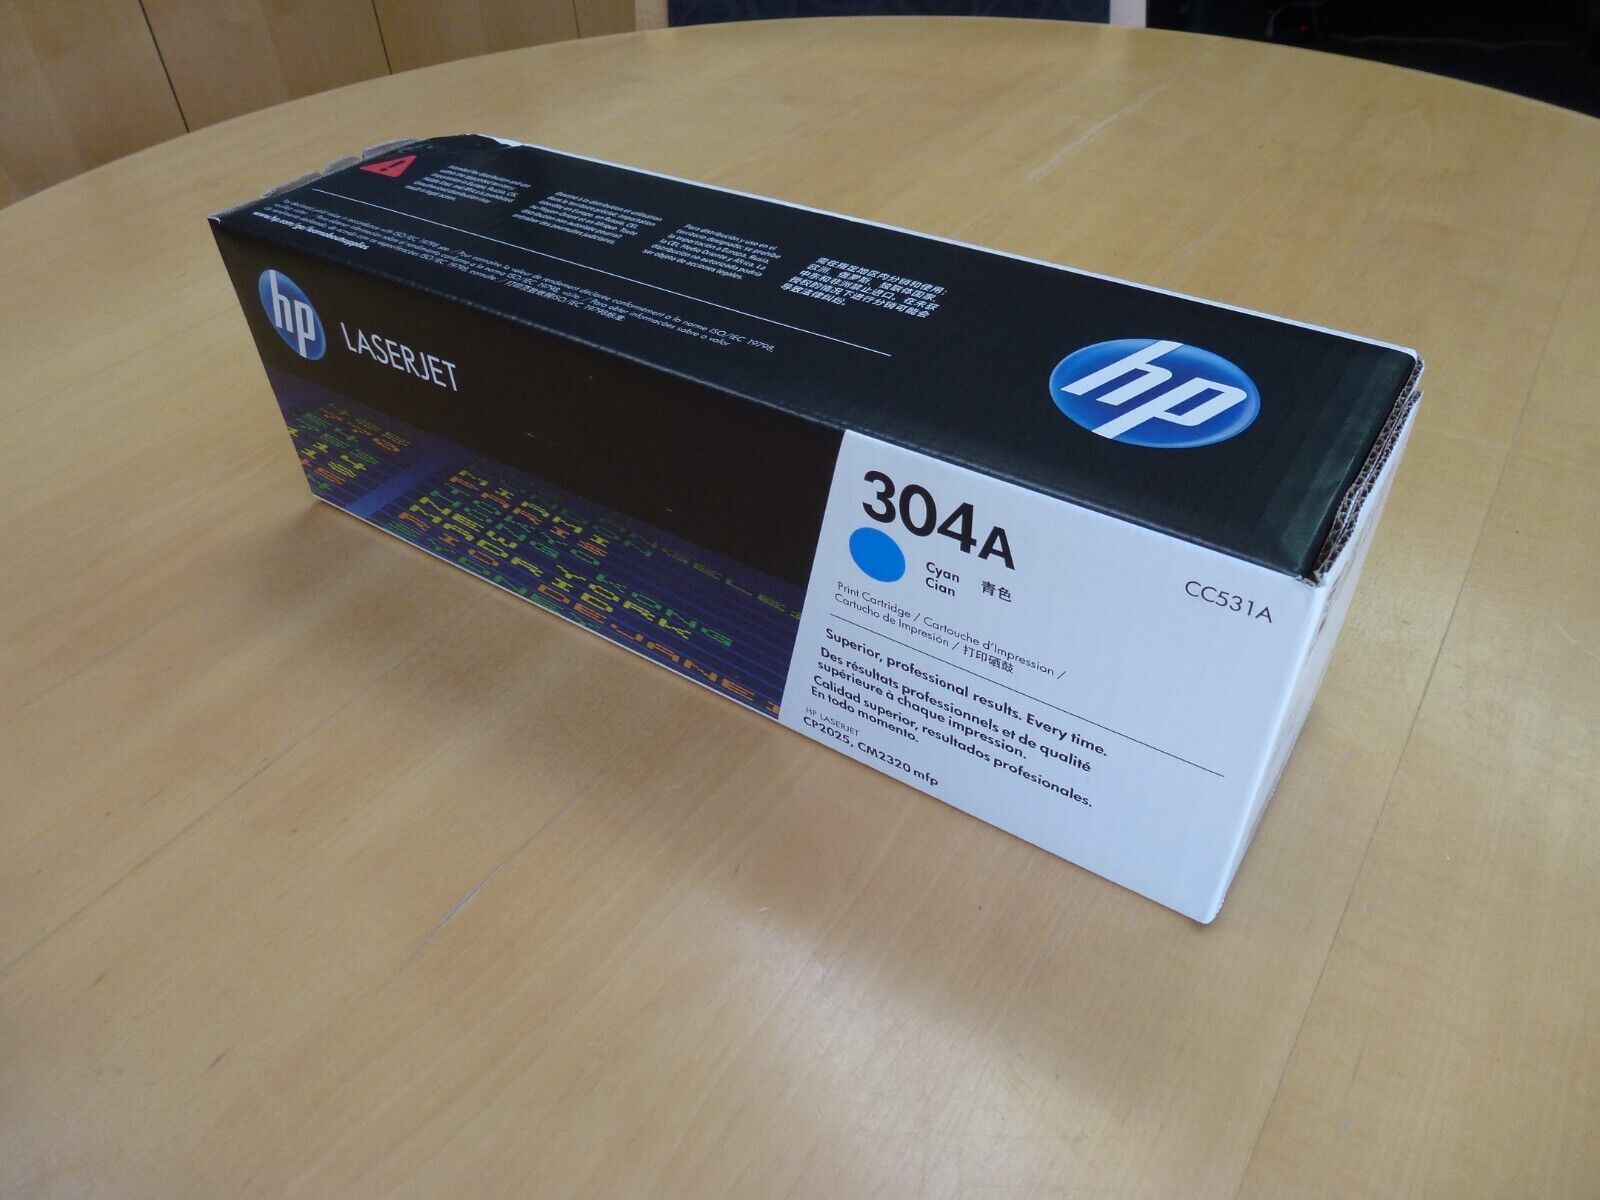 HP 304A (CC531A) Cyan Toner Cartridge Original HP OEM - NEW sealed in box